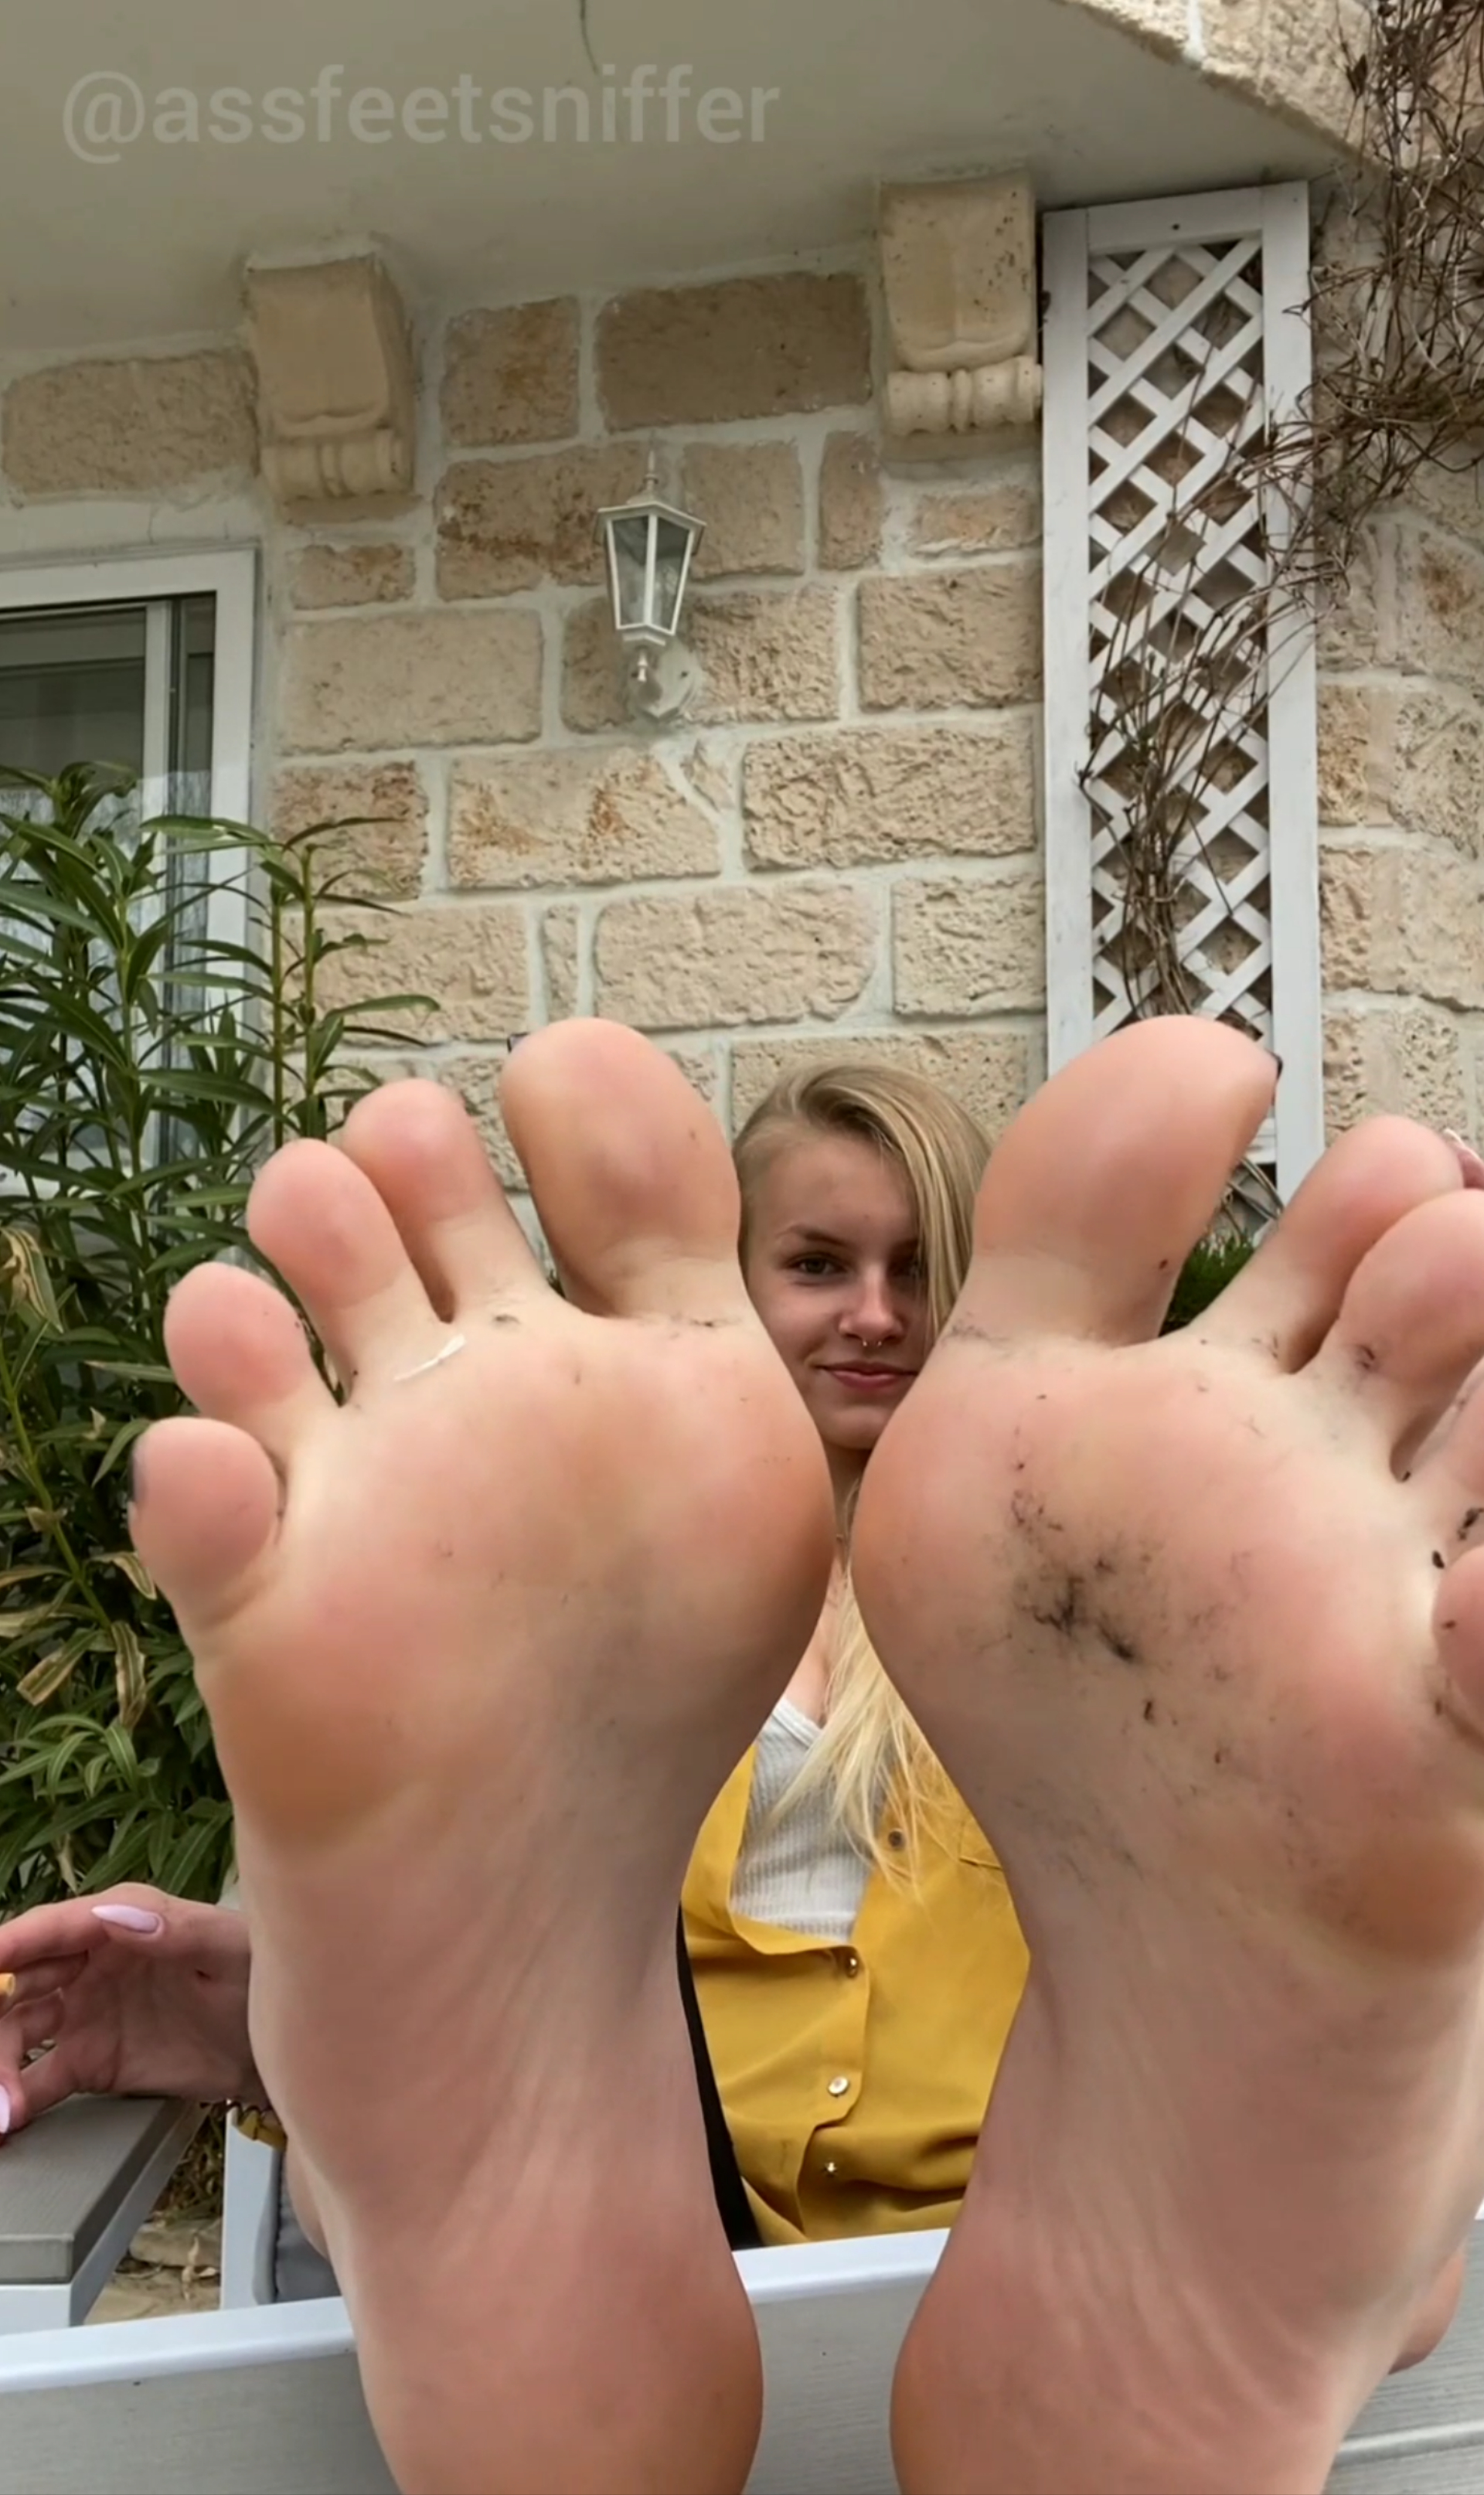 Worship: Blonde Girl Stinky Feet And Dirty Socks - ThisVid.com